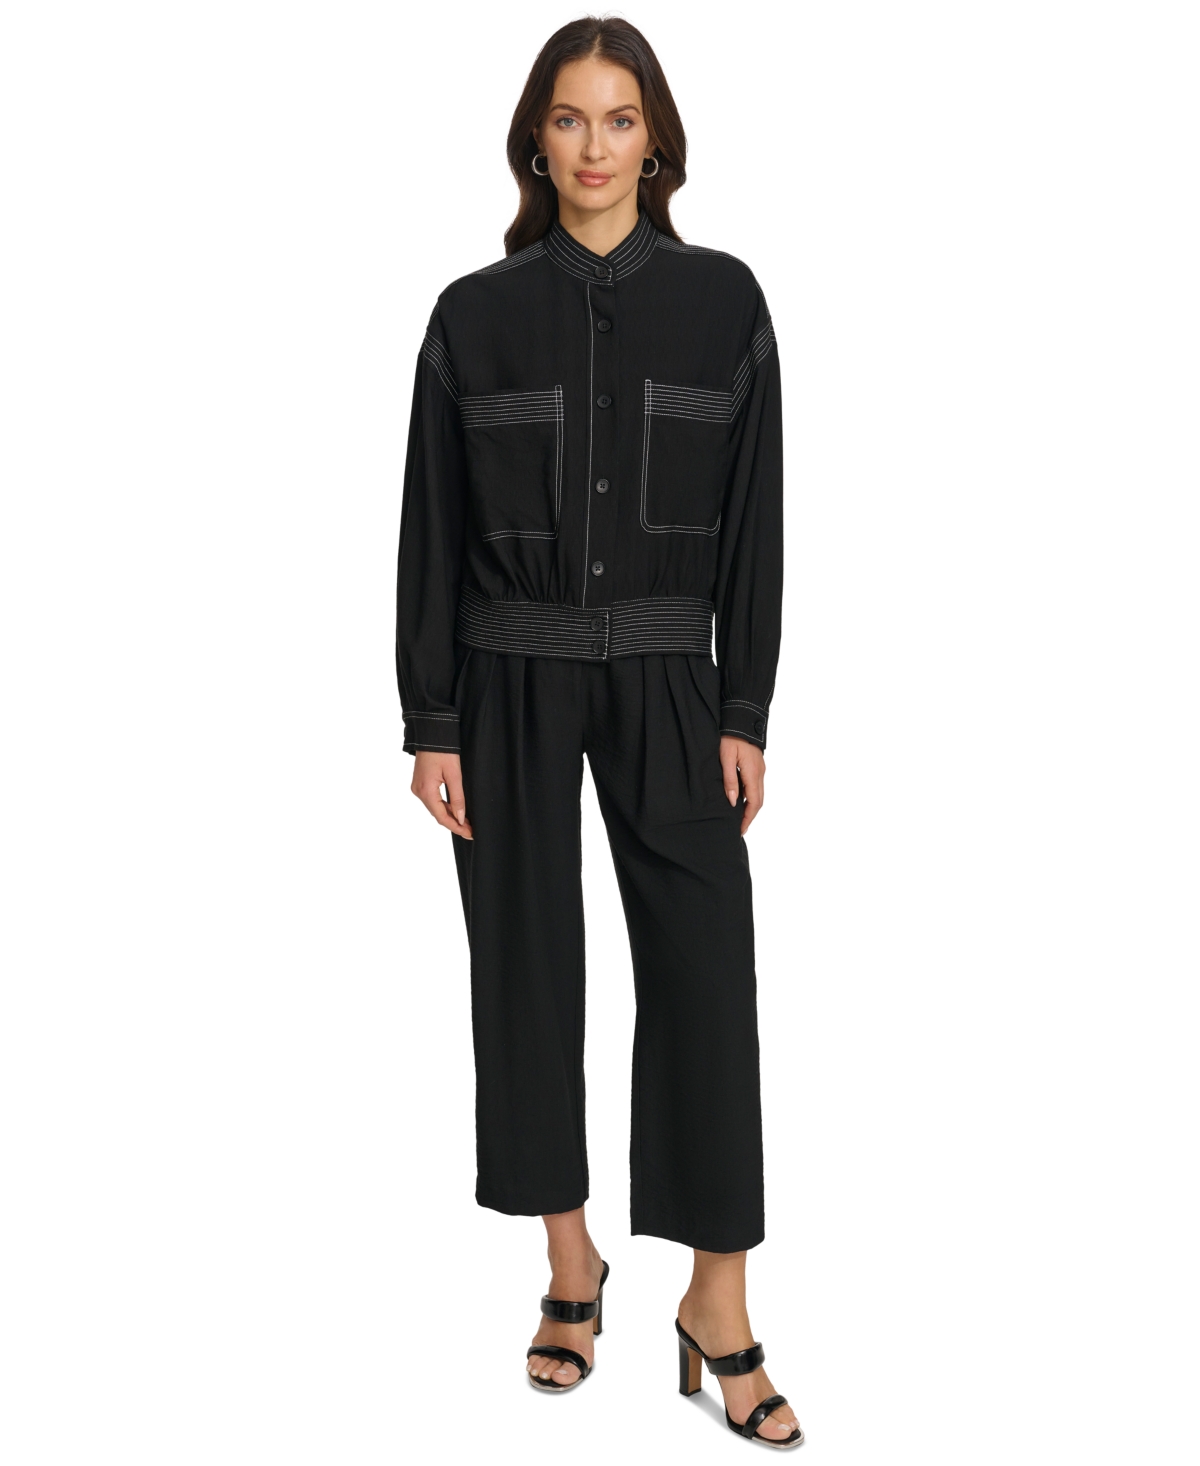 Women's Contrast-Stitched Jacket - Black